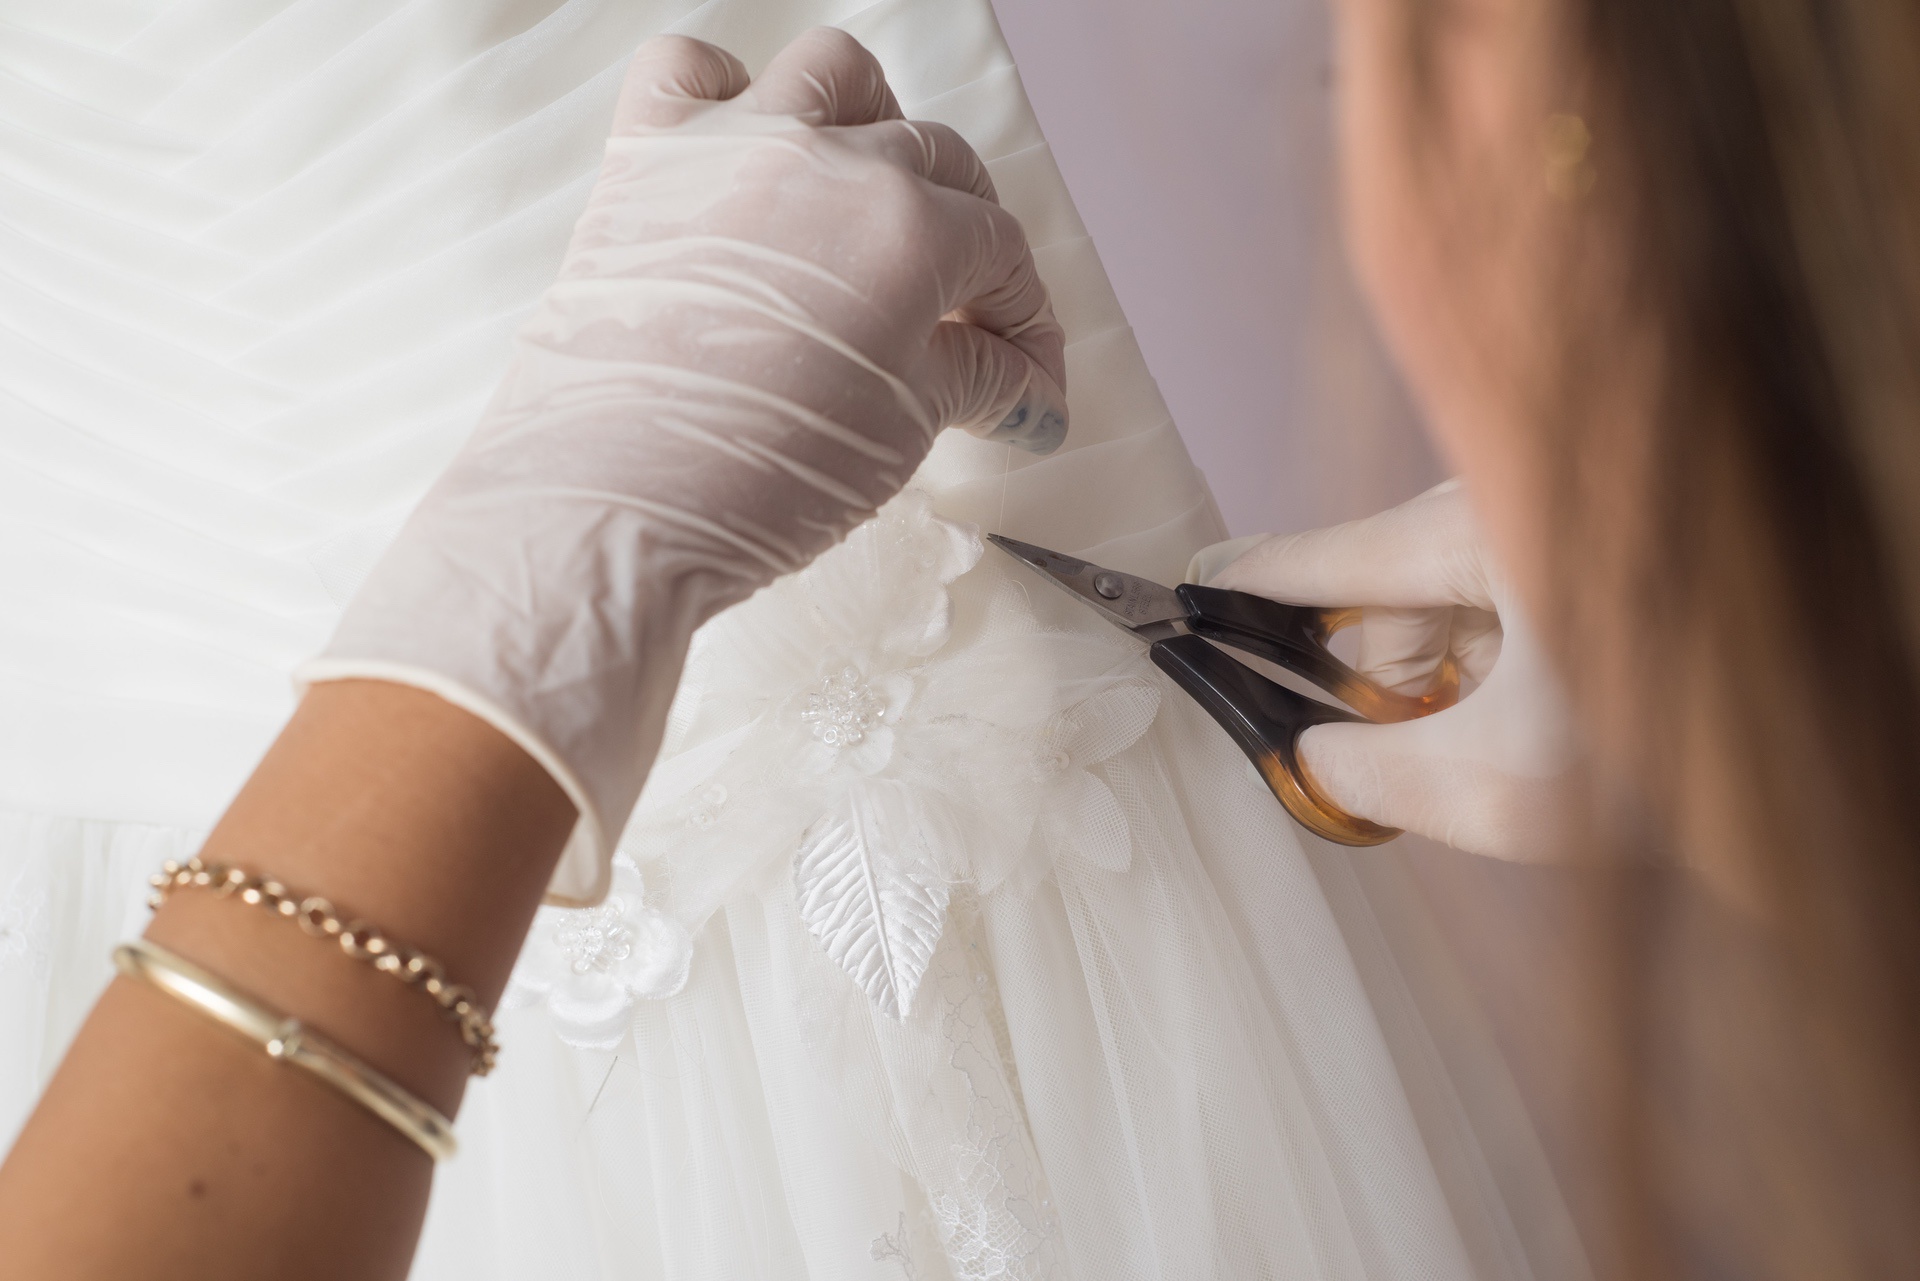 Woman working on a wedding dress repair